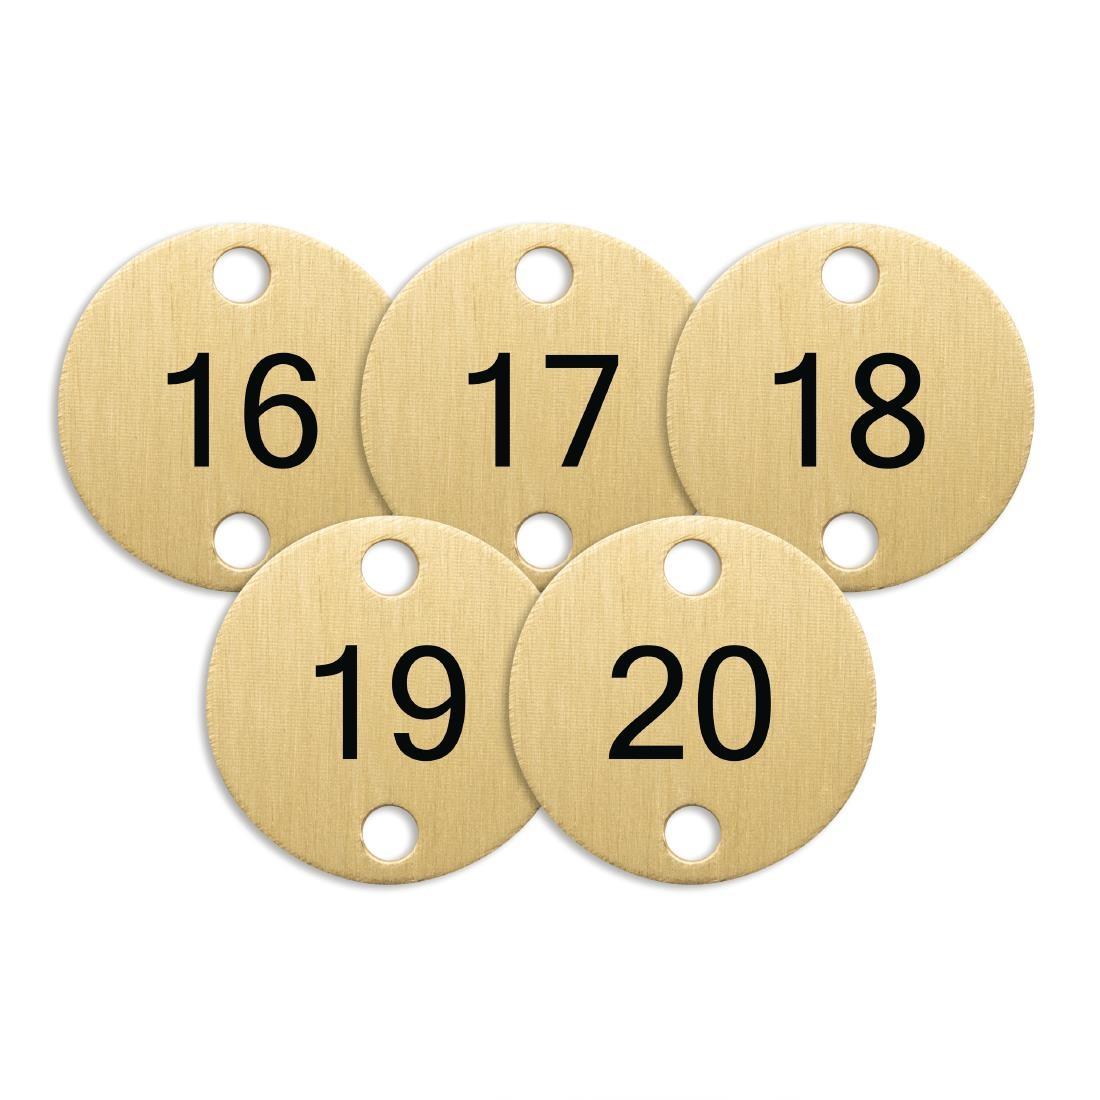 Bolero Table Numbers Bronze (16-20) - DY777  - 3